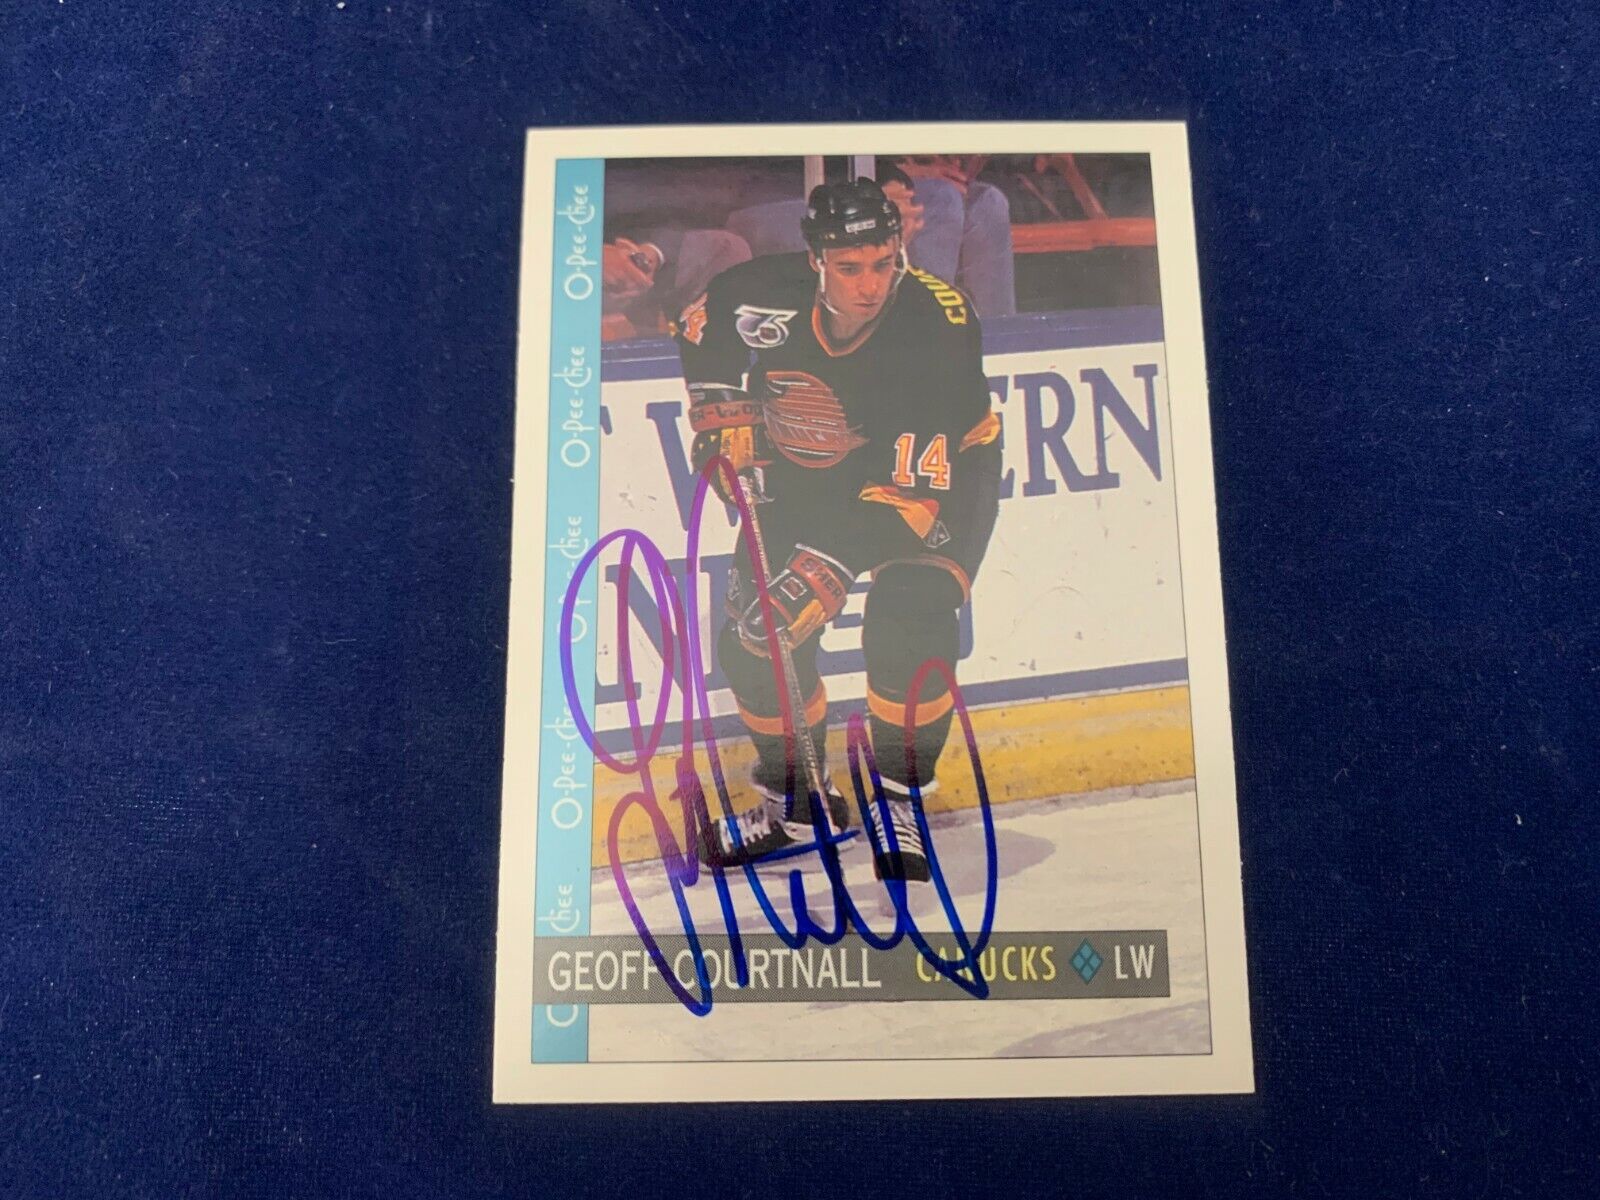 Geoff Courtnall Vancouver Canucks Hand Signed 1992 O-PEE-CHEE Hockey Card 176